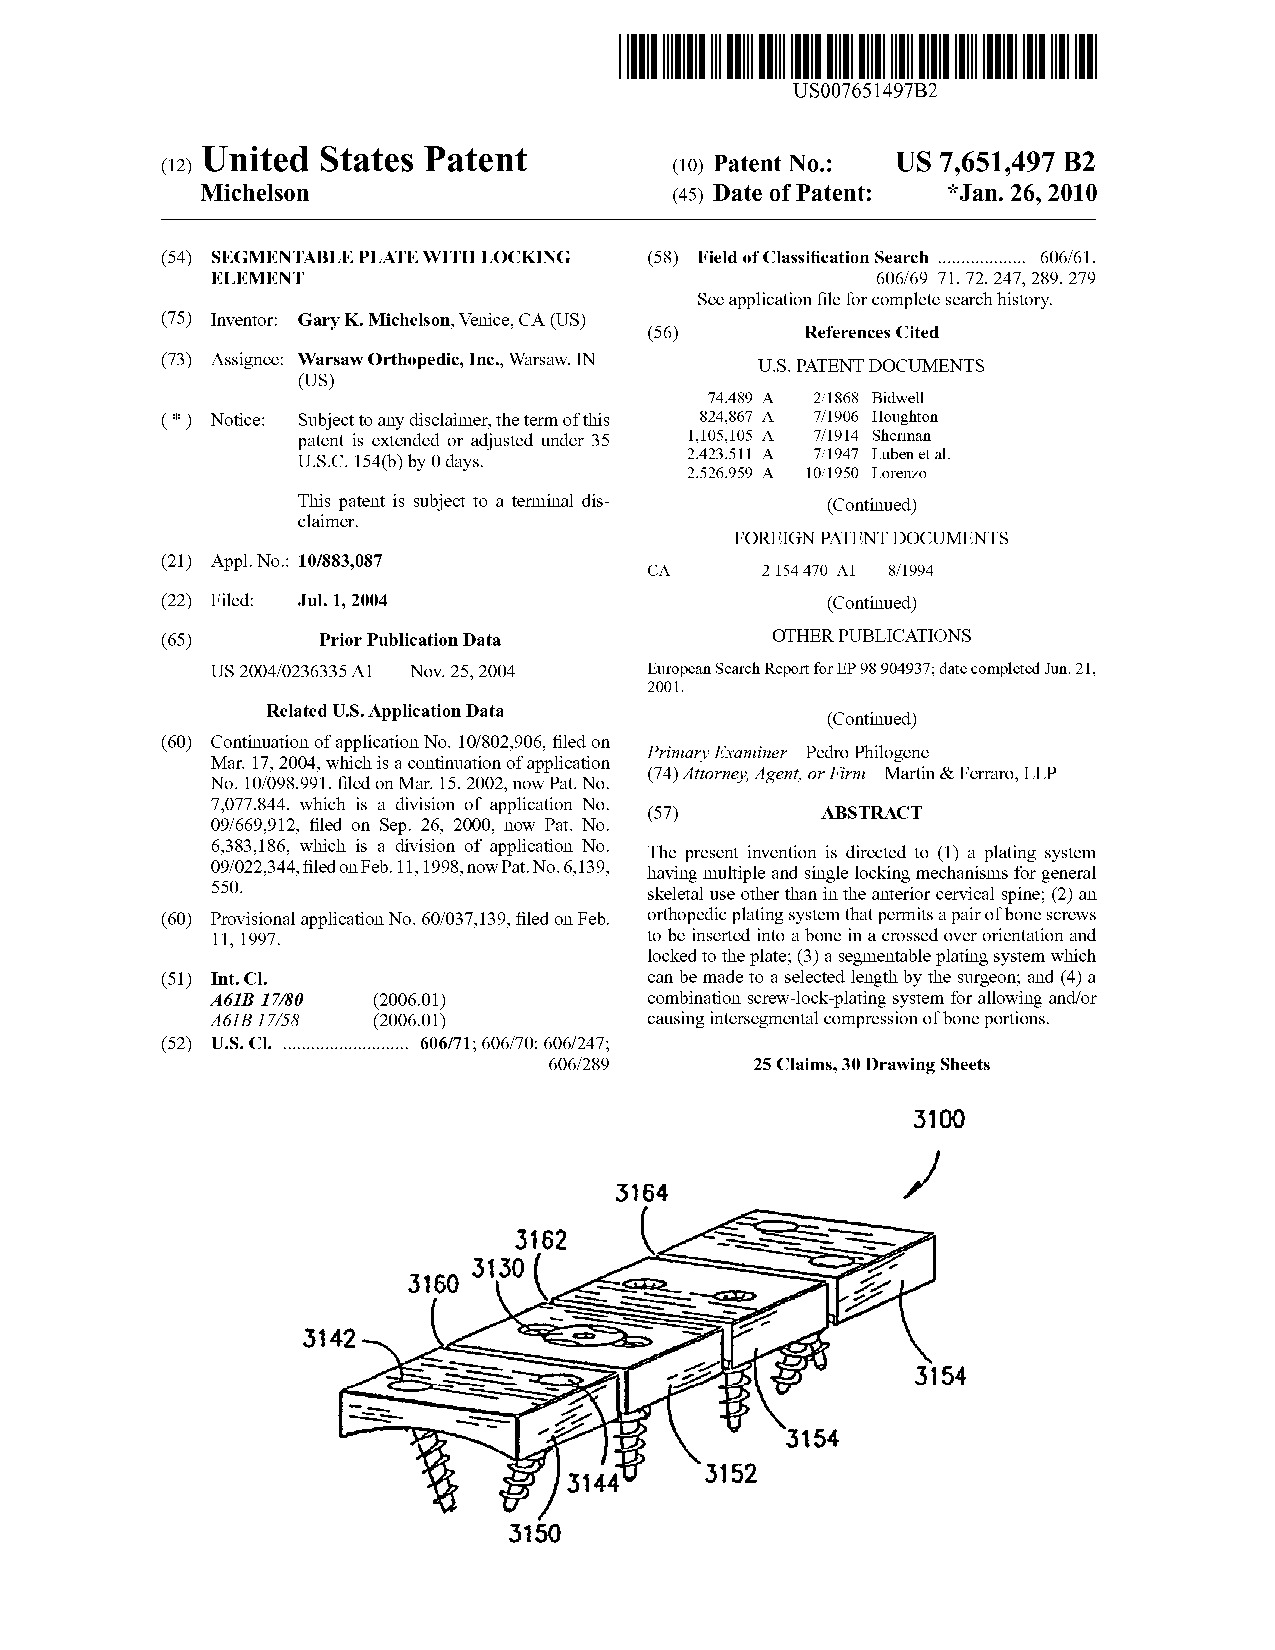 Segmentable plate with locking element - Patent 7,651,497